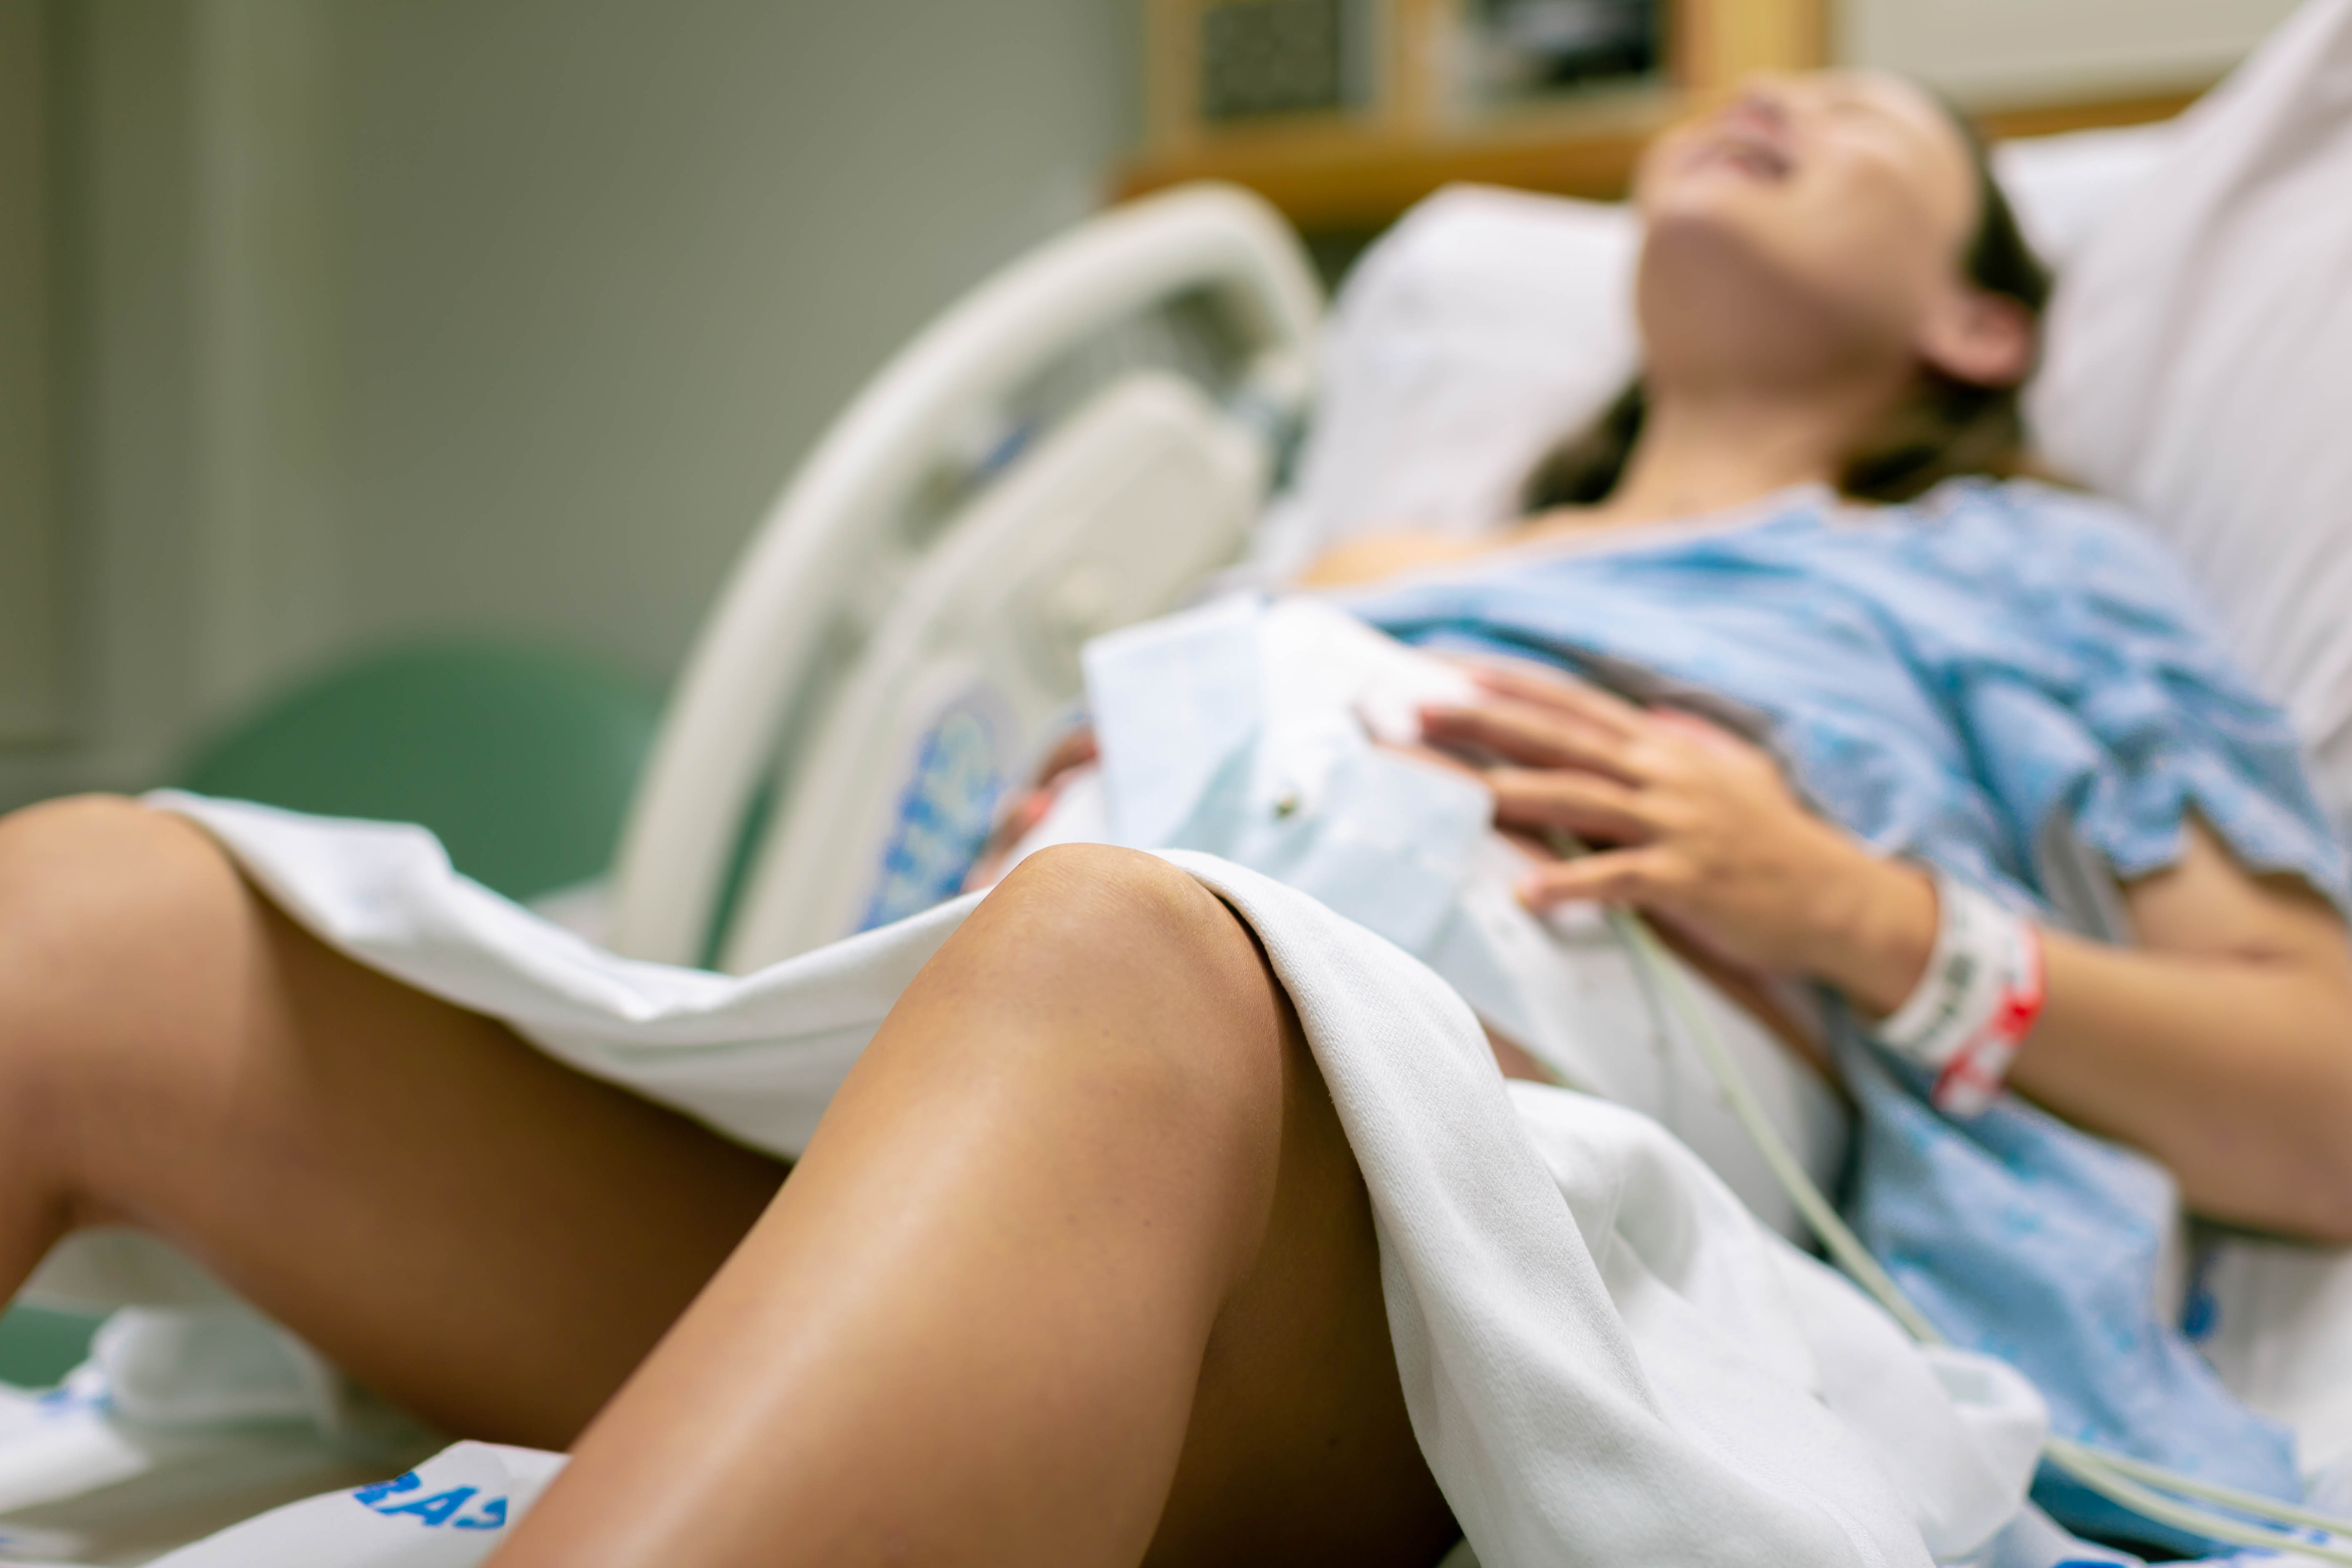 A woman in labor | Source: Shutterstock